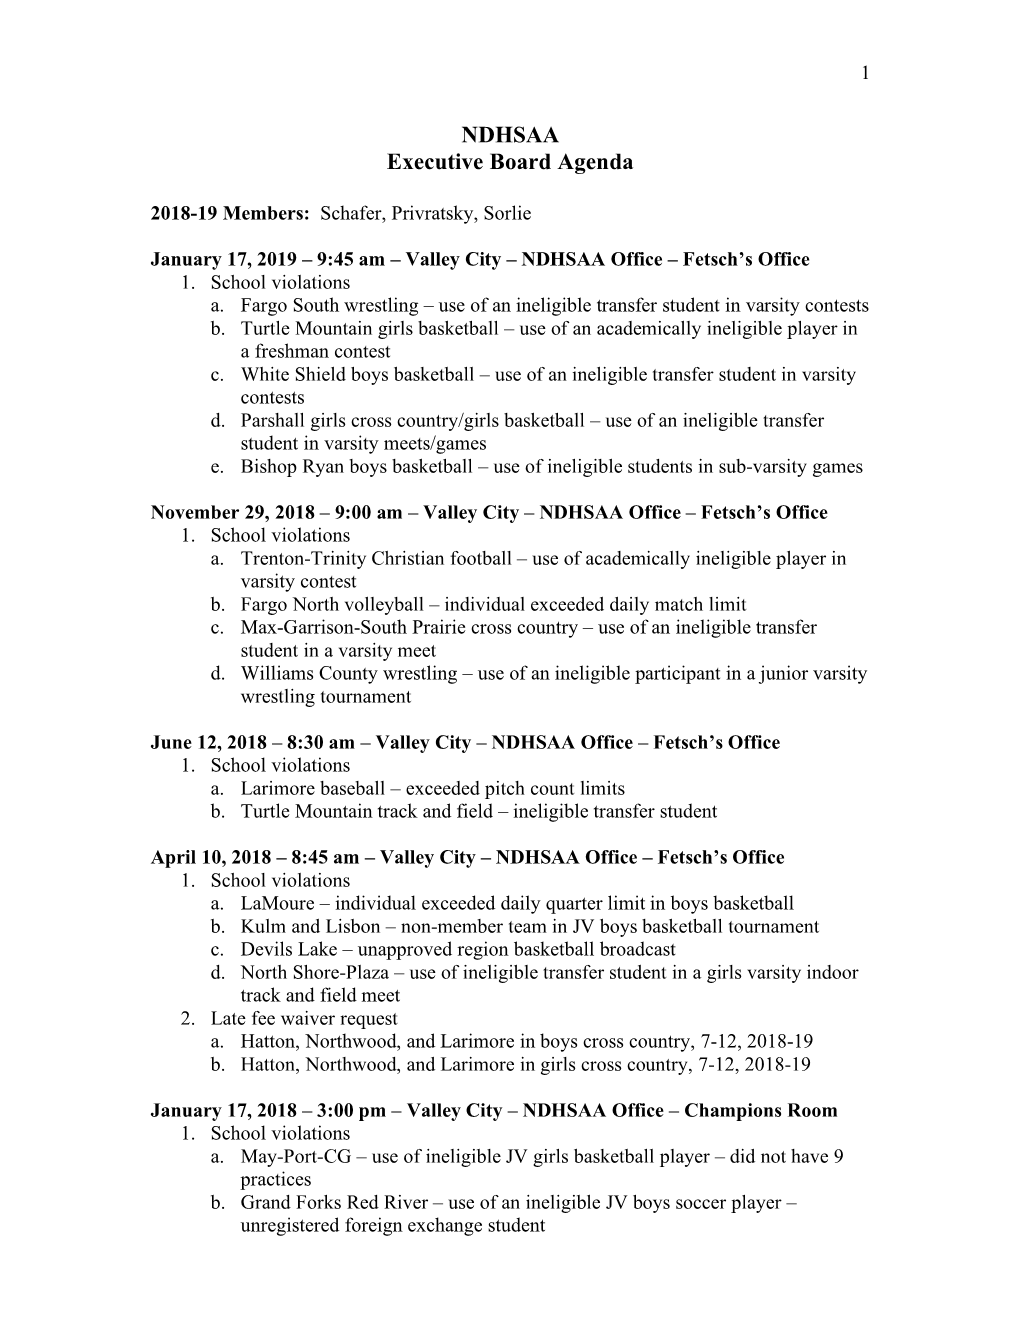 NDHSAA Executive Board Agenda